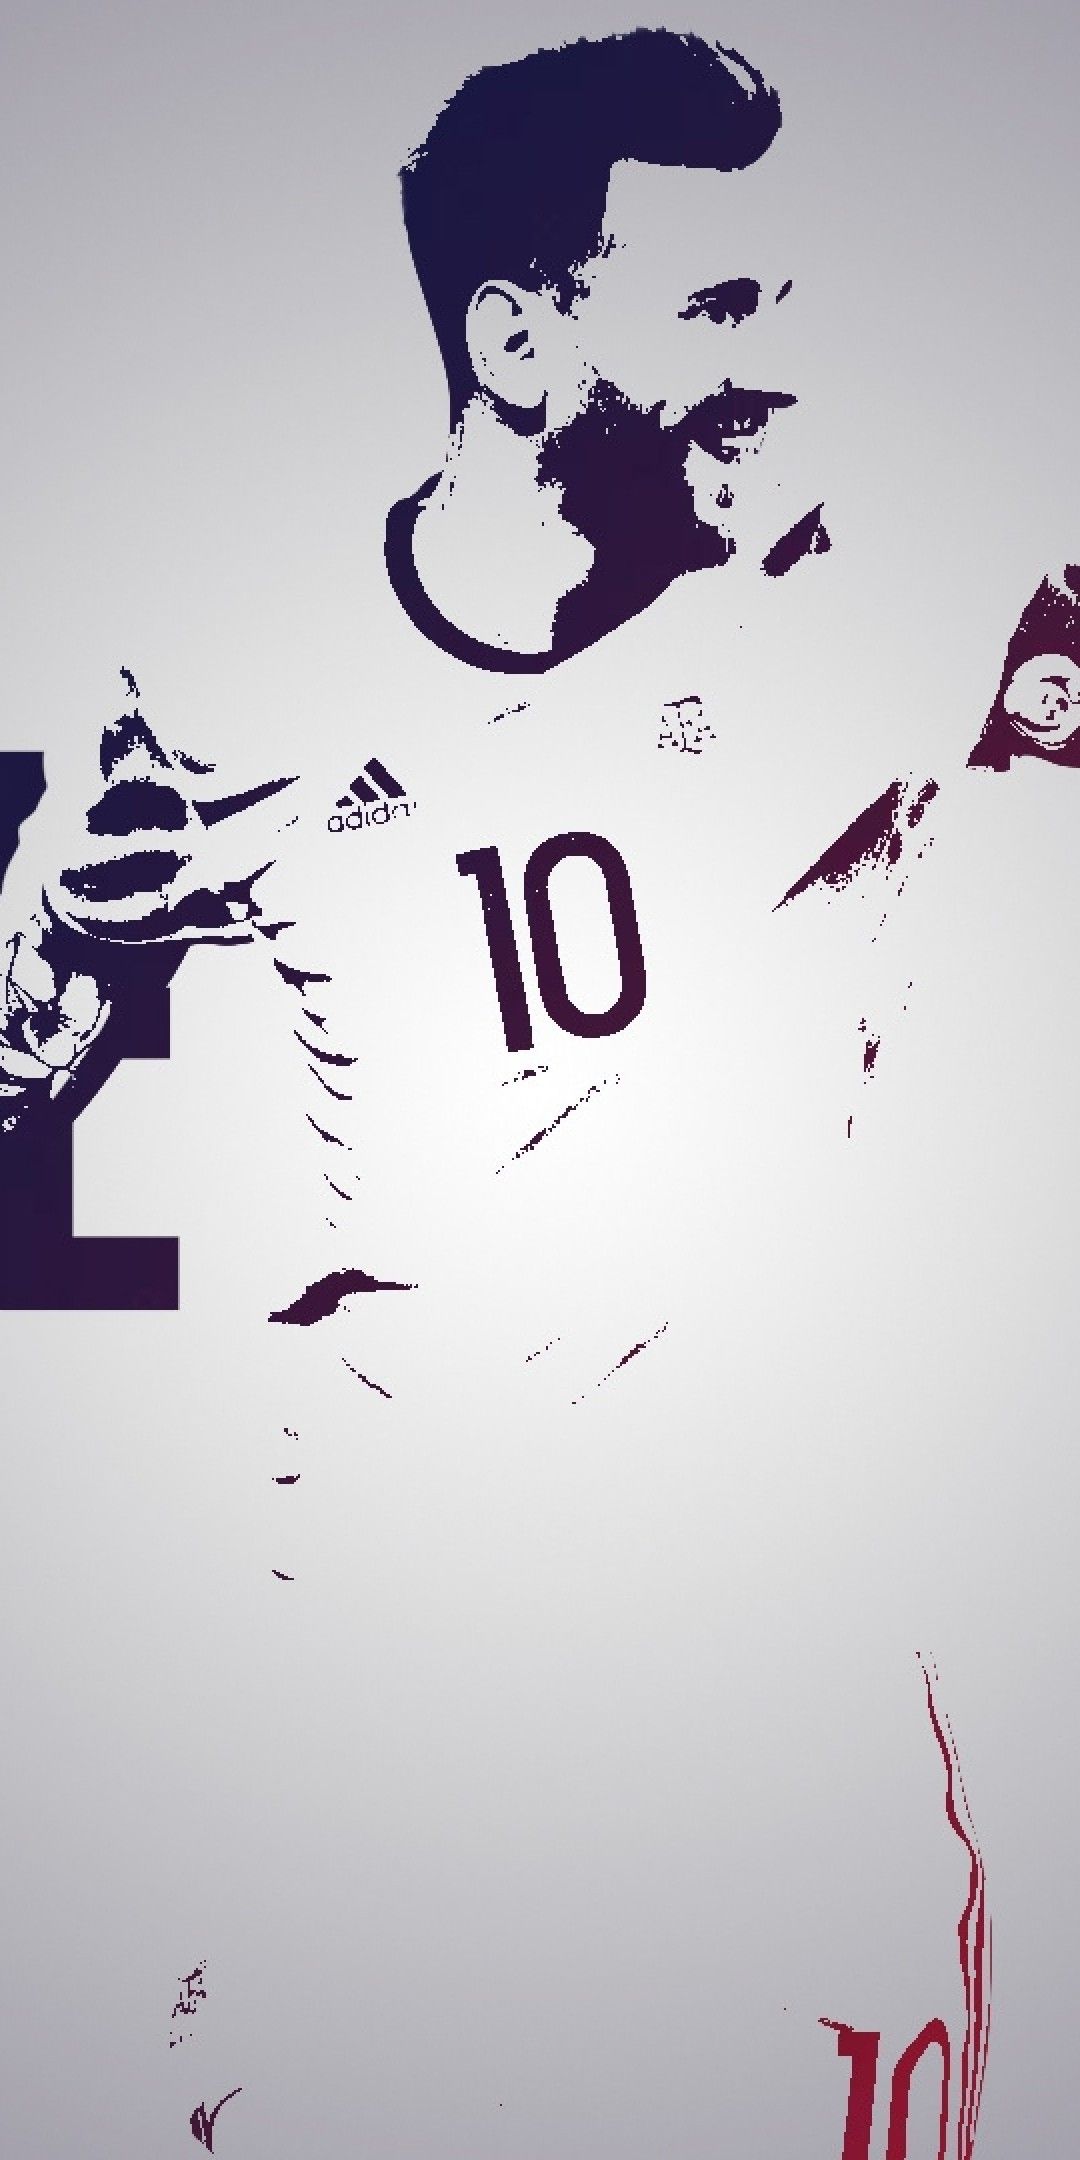 Lionel Messi Digital Art Wallpapers